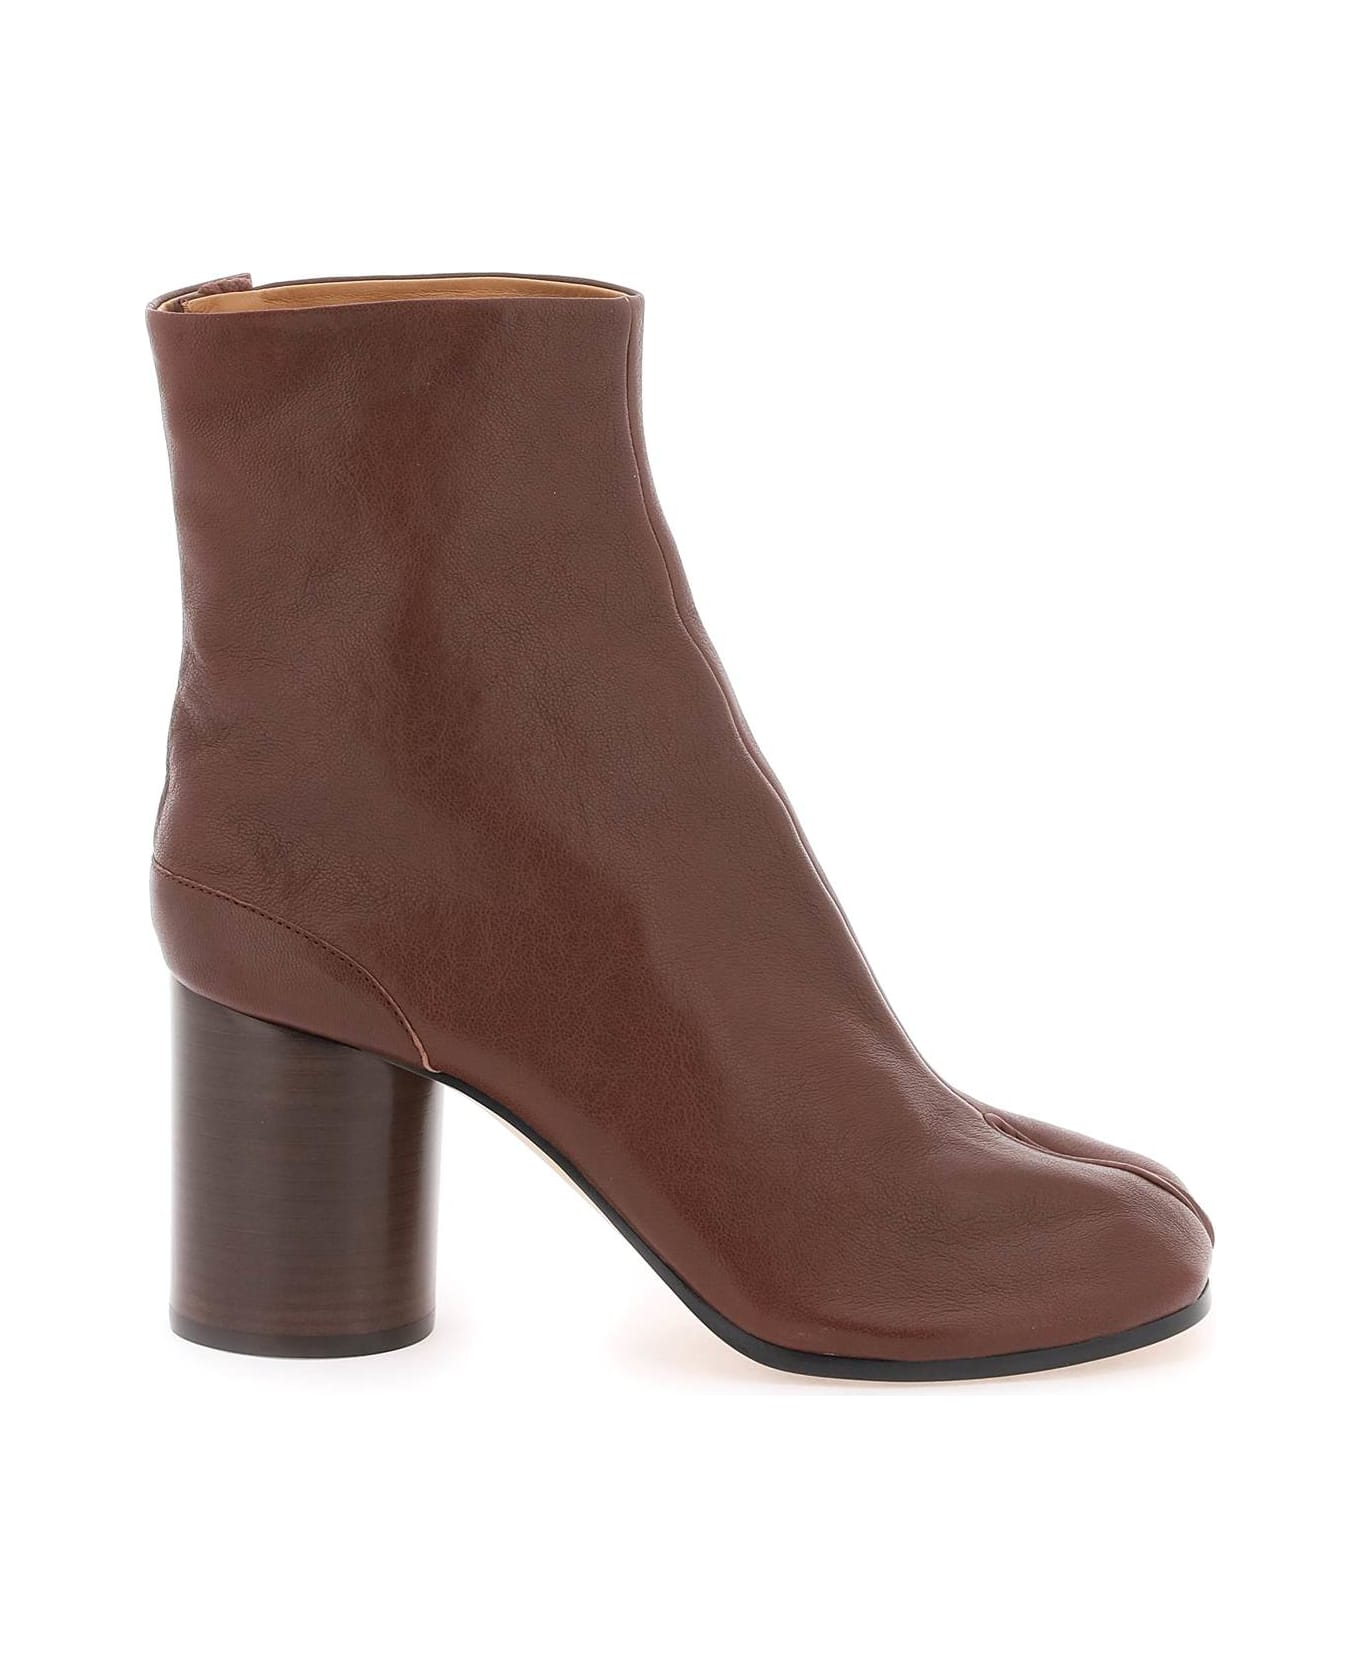 Maison Margiela Tabi Ankle Boots - MAJOR BROWN (Brown)